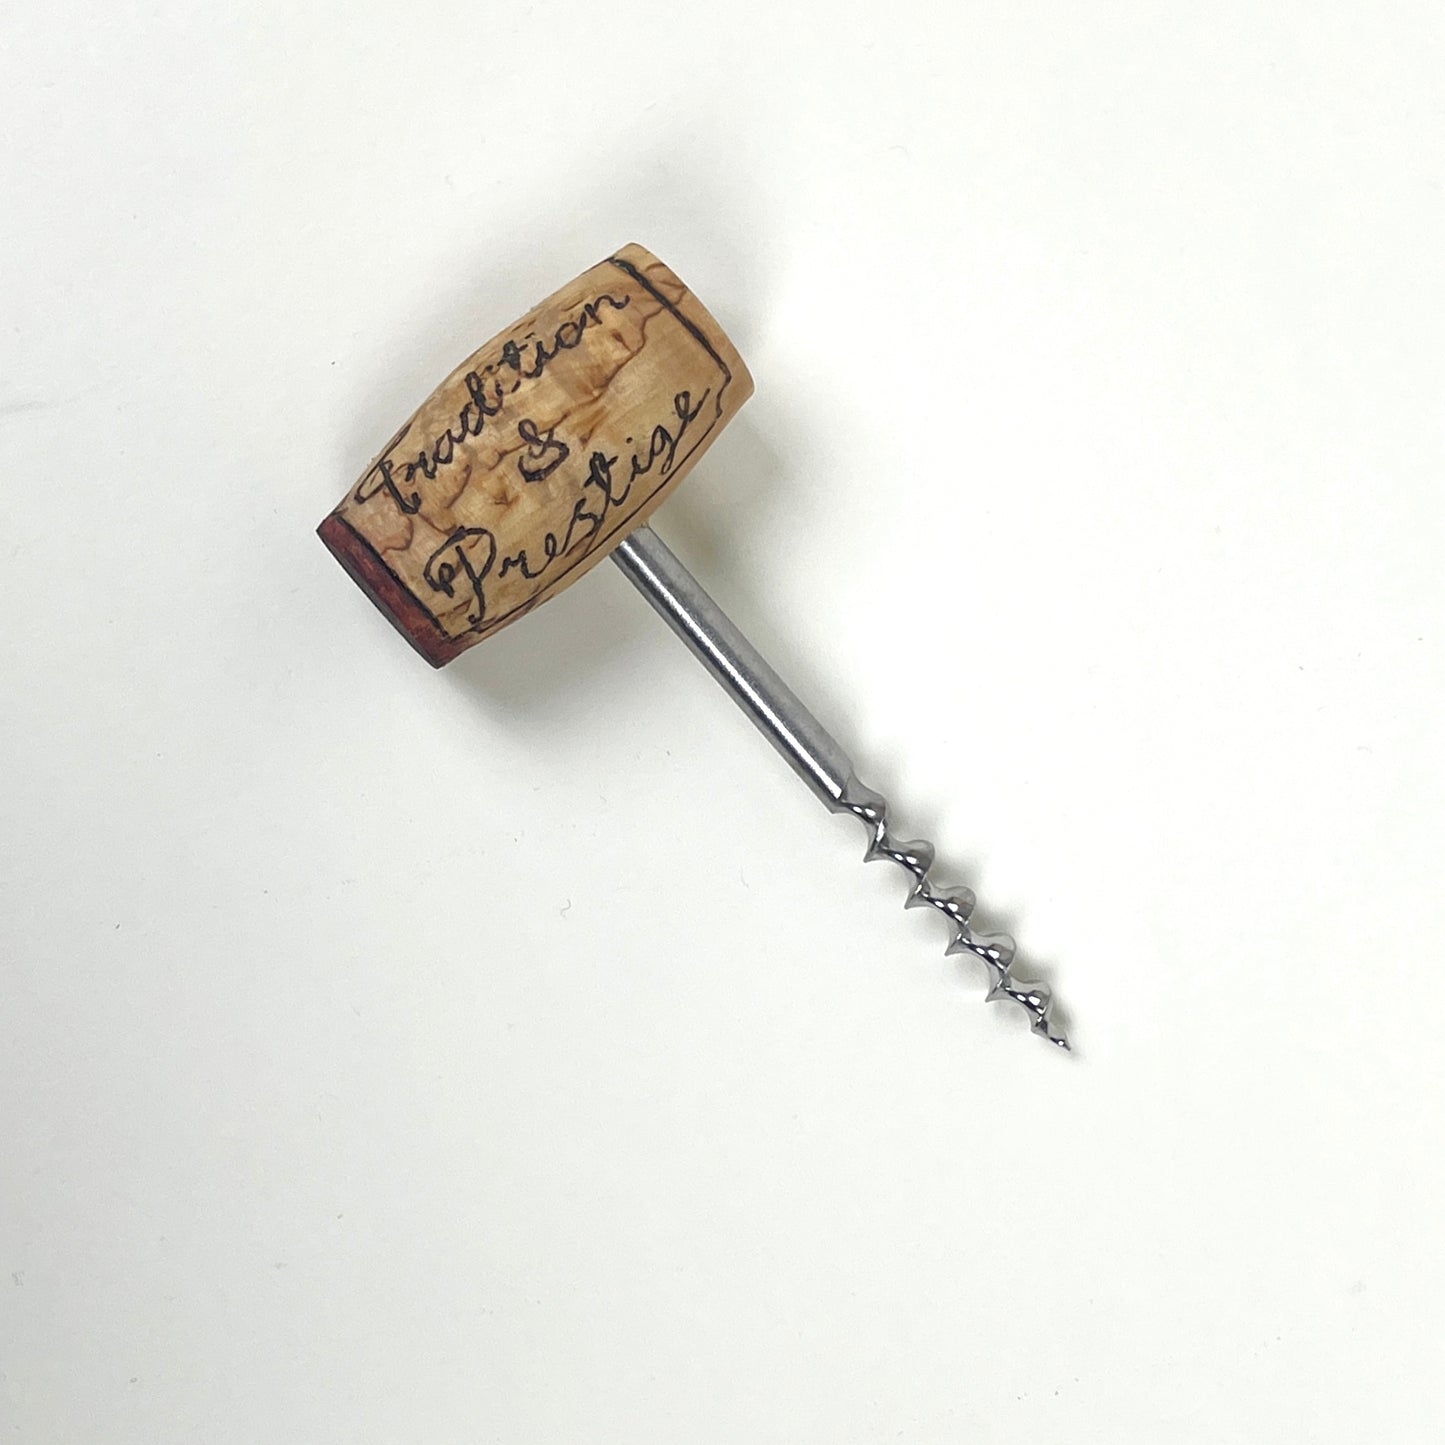 Tradition & Prestige corkscrew in curly birch by Kasper Nihlmark